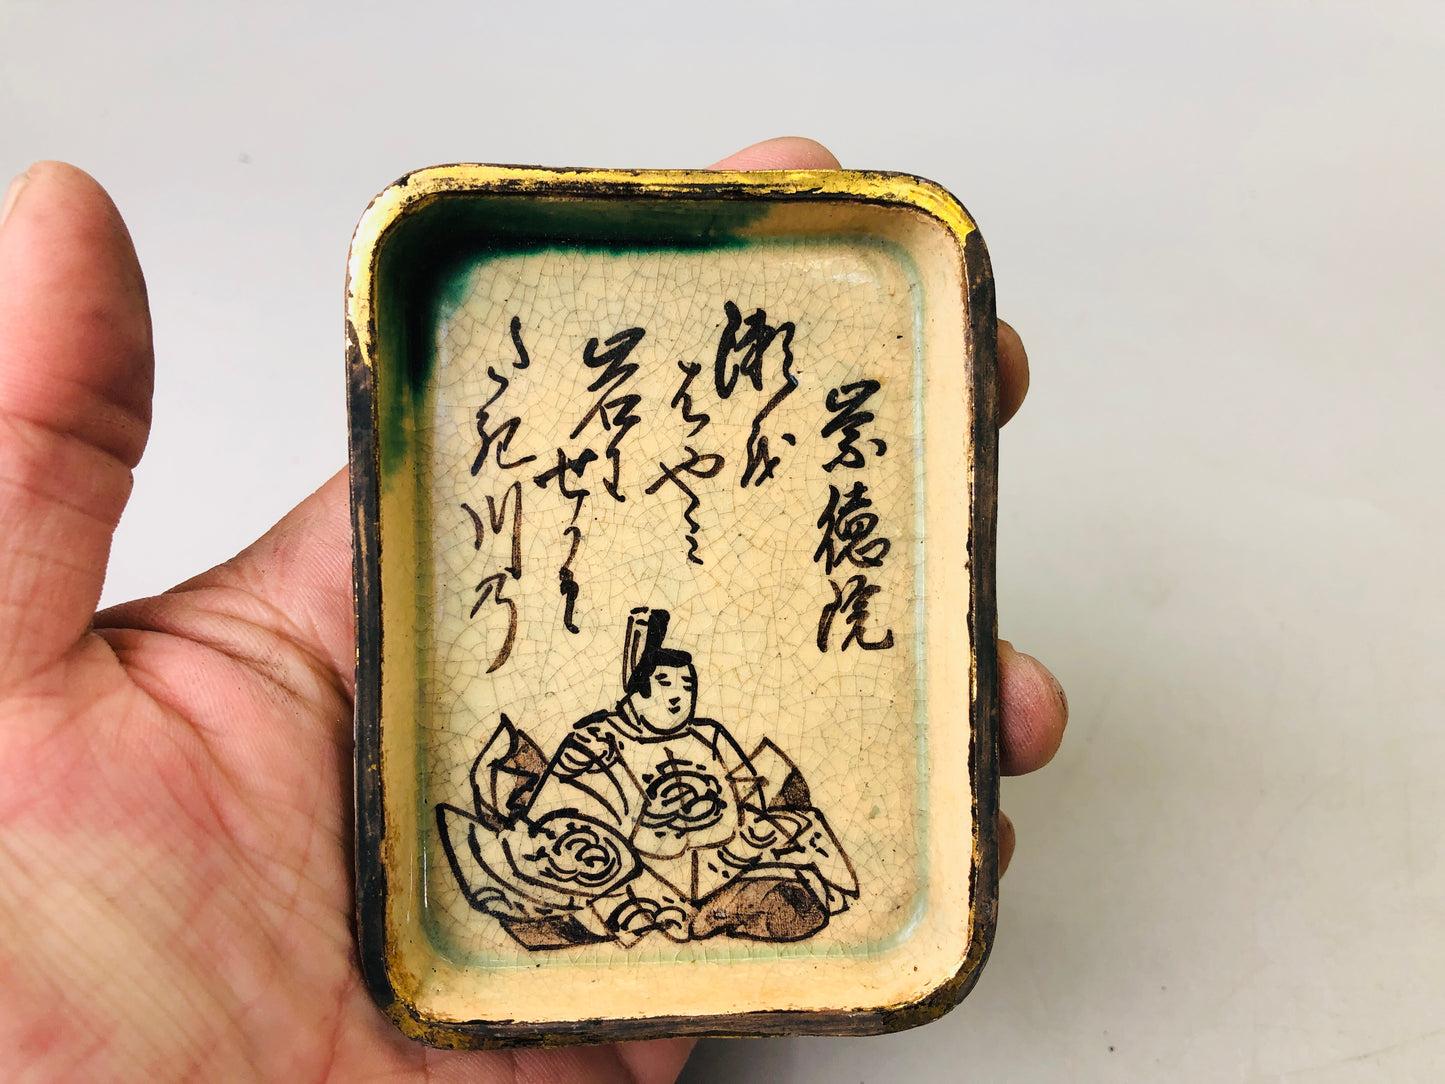 Y6132 [VIDEO] DISH Raku-ware small plates set of 7 Japan antique tableware kitchen